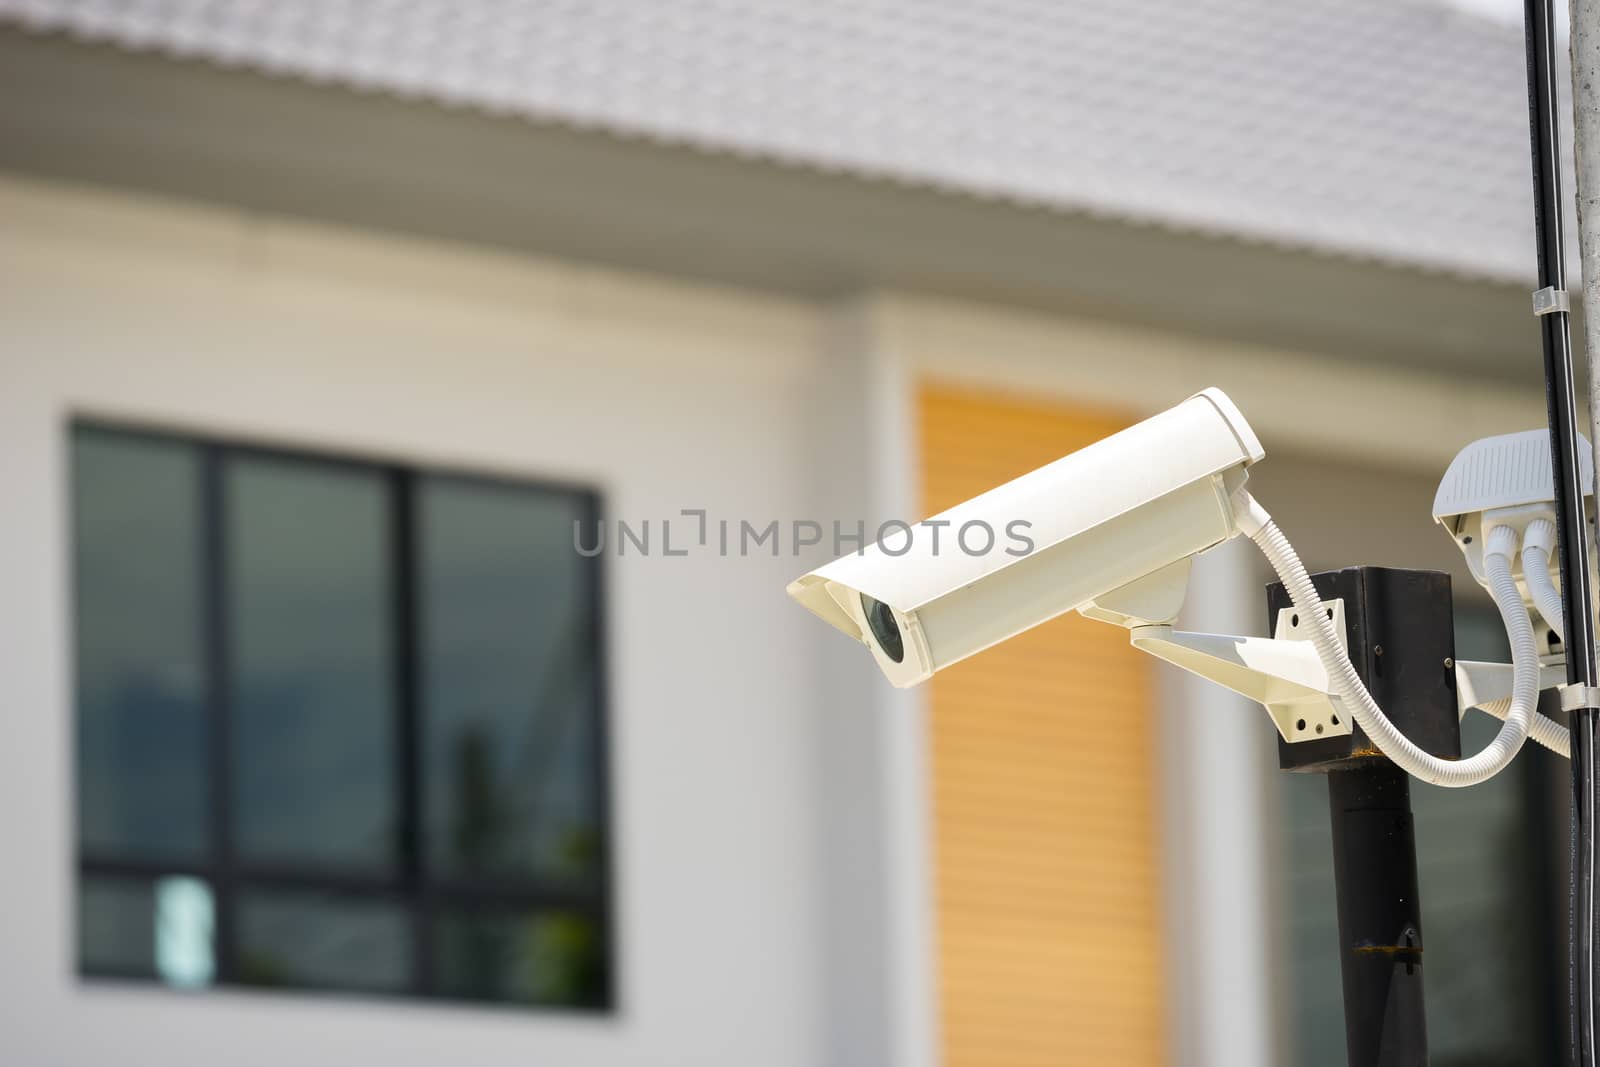 CCTV camera in home village by Alicephoto